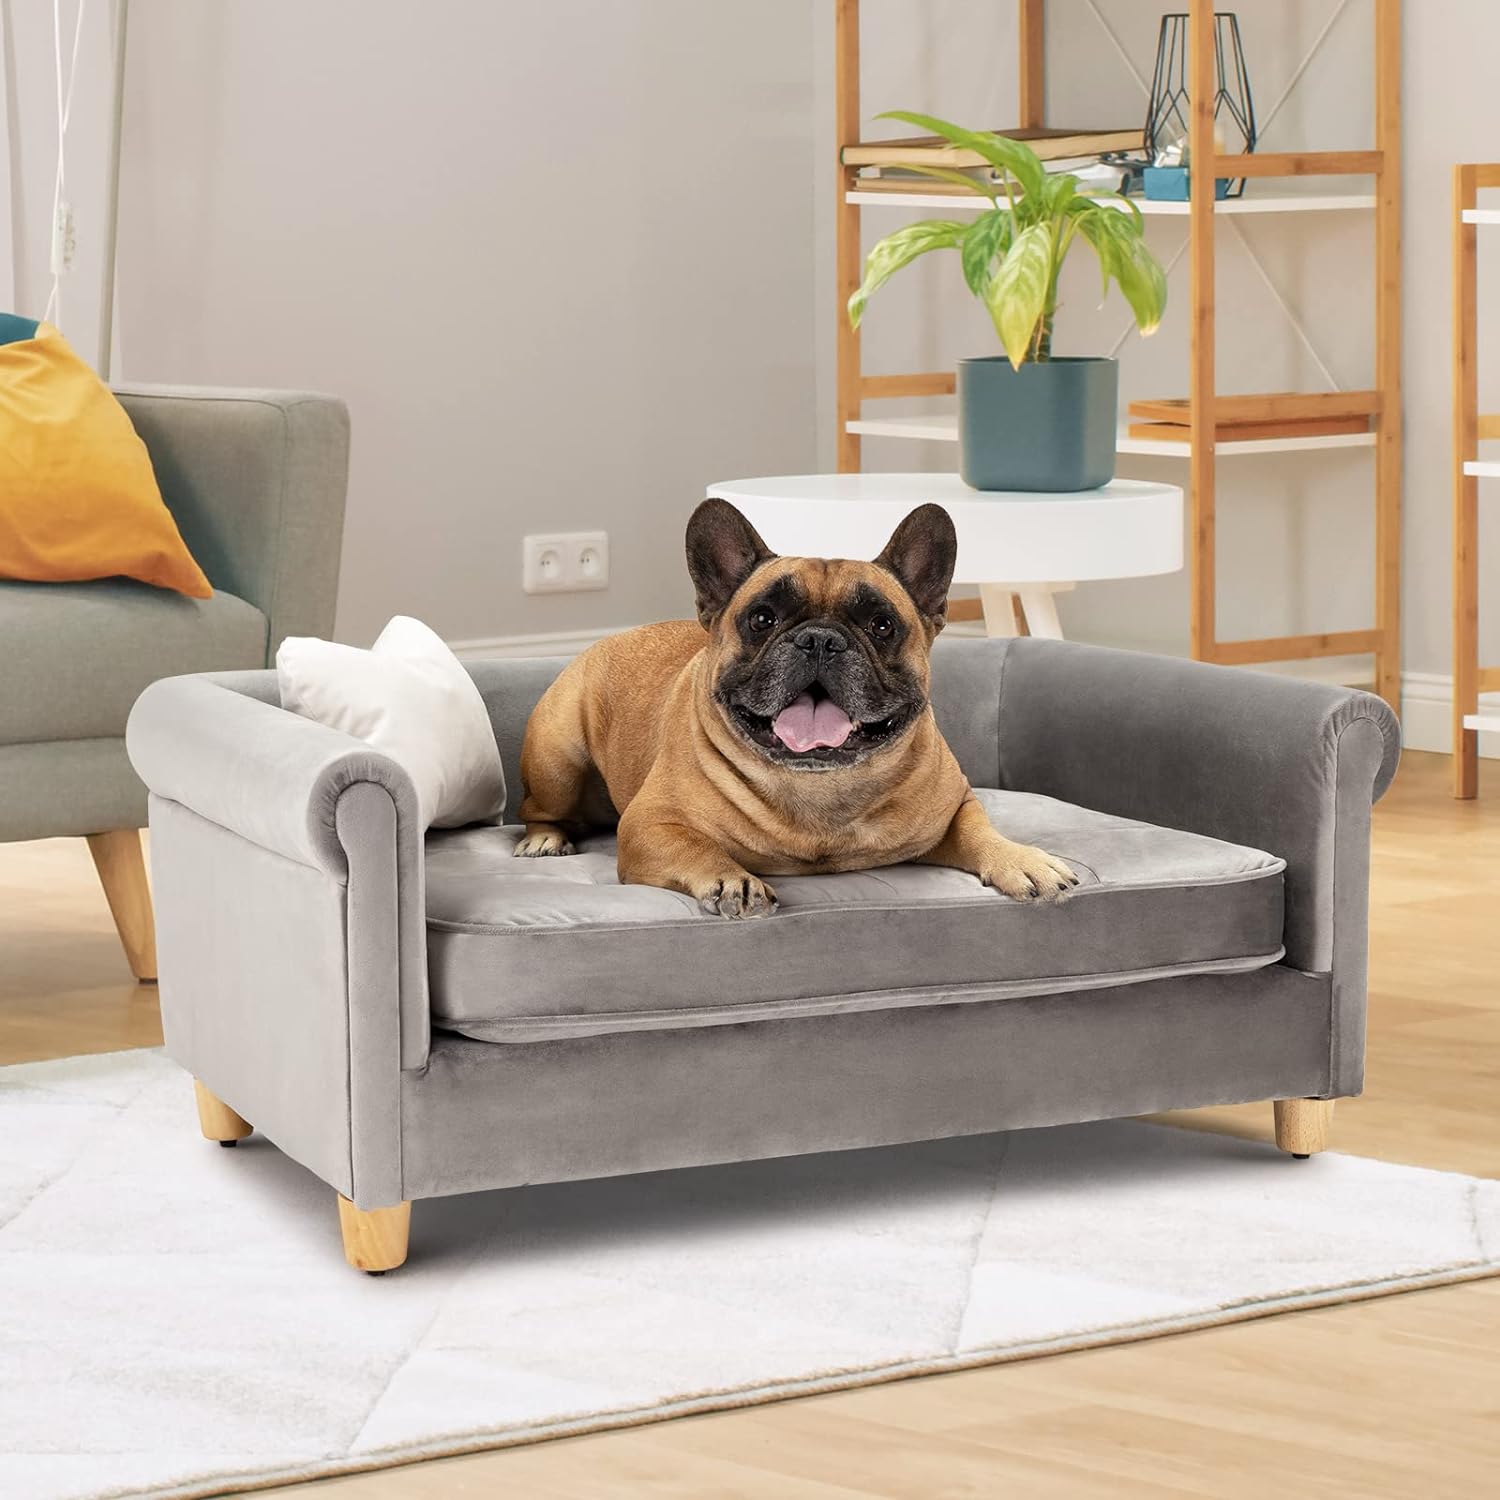 dCee Medium Pet Sofa